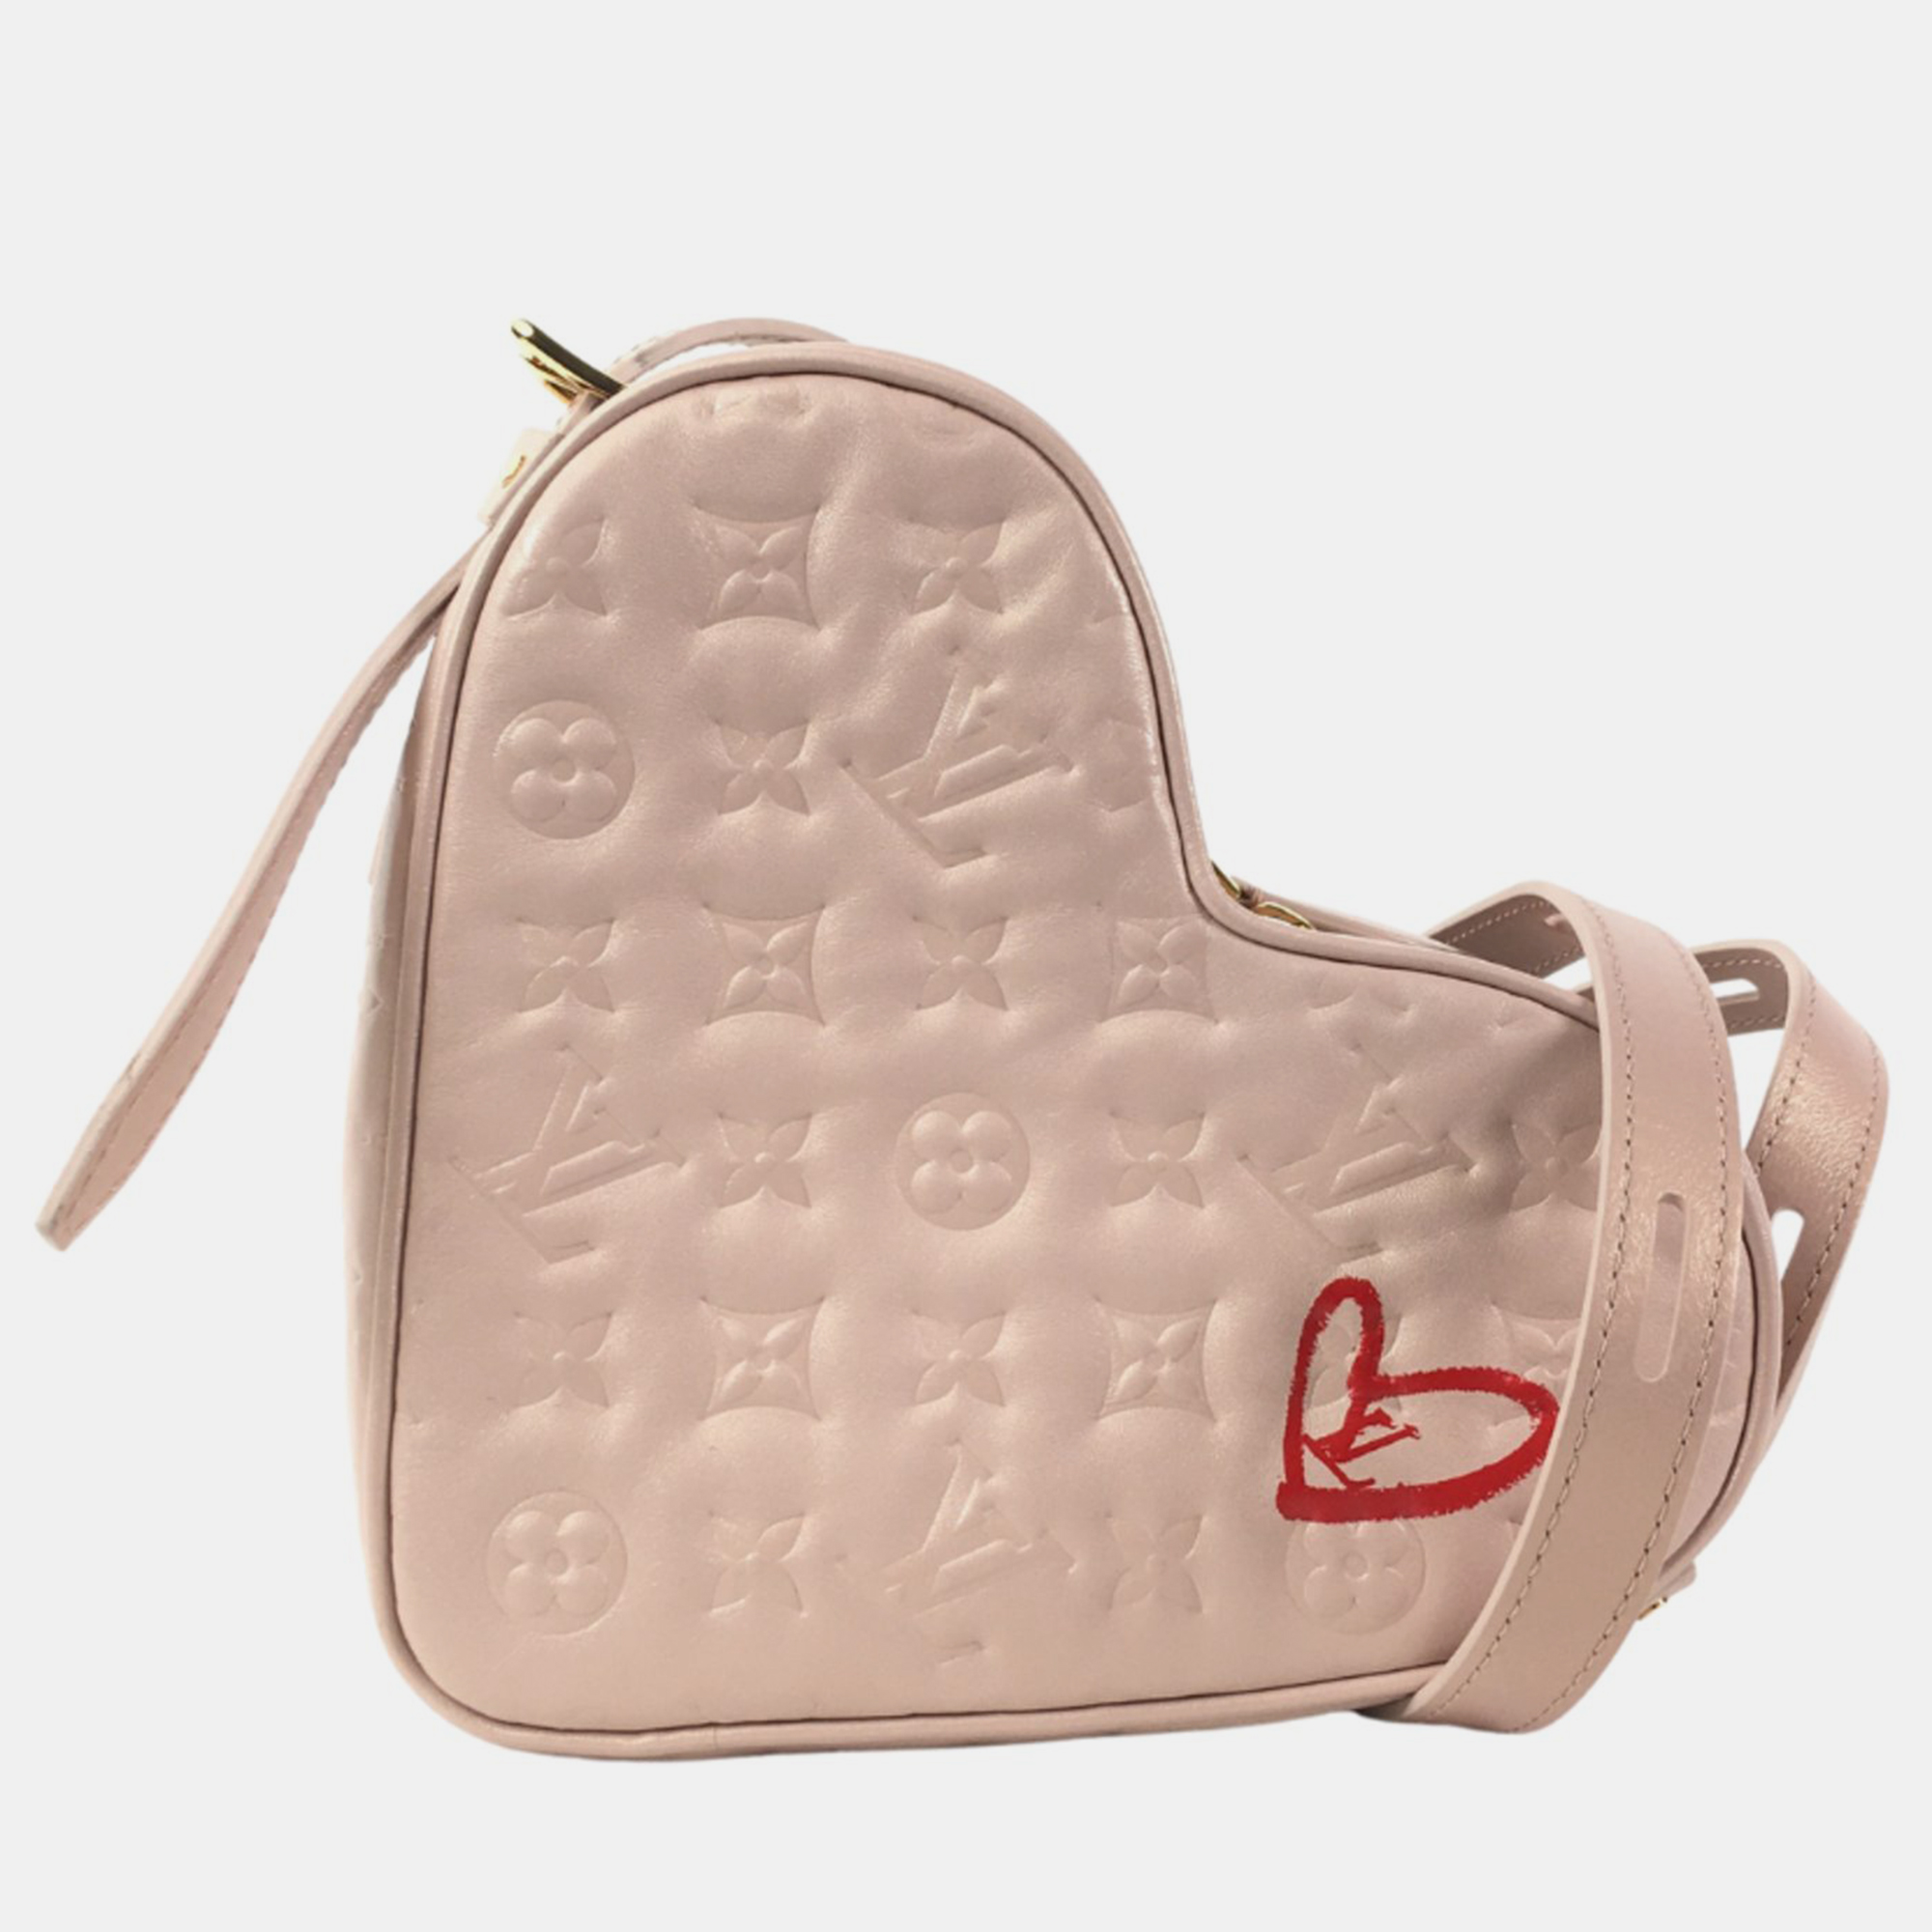 Louis vuitton pink monogram empriente leather fall in love shoulder bag